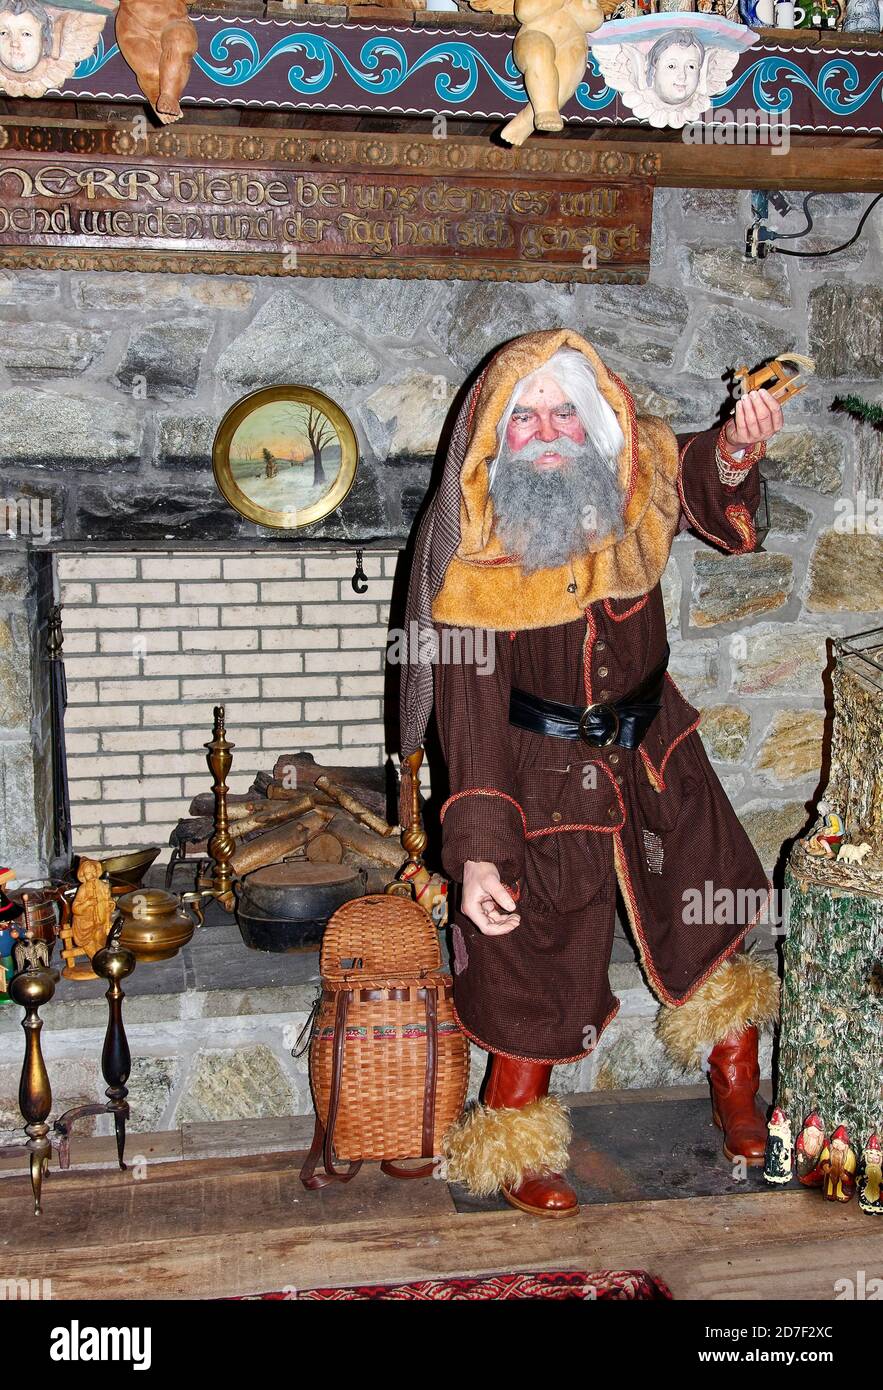 Weinhnachtsmann of Germany, figure holding wood toy, woven basket, stone fireplace, Christmas scene, holiday, Paradise, PA Stock Photo